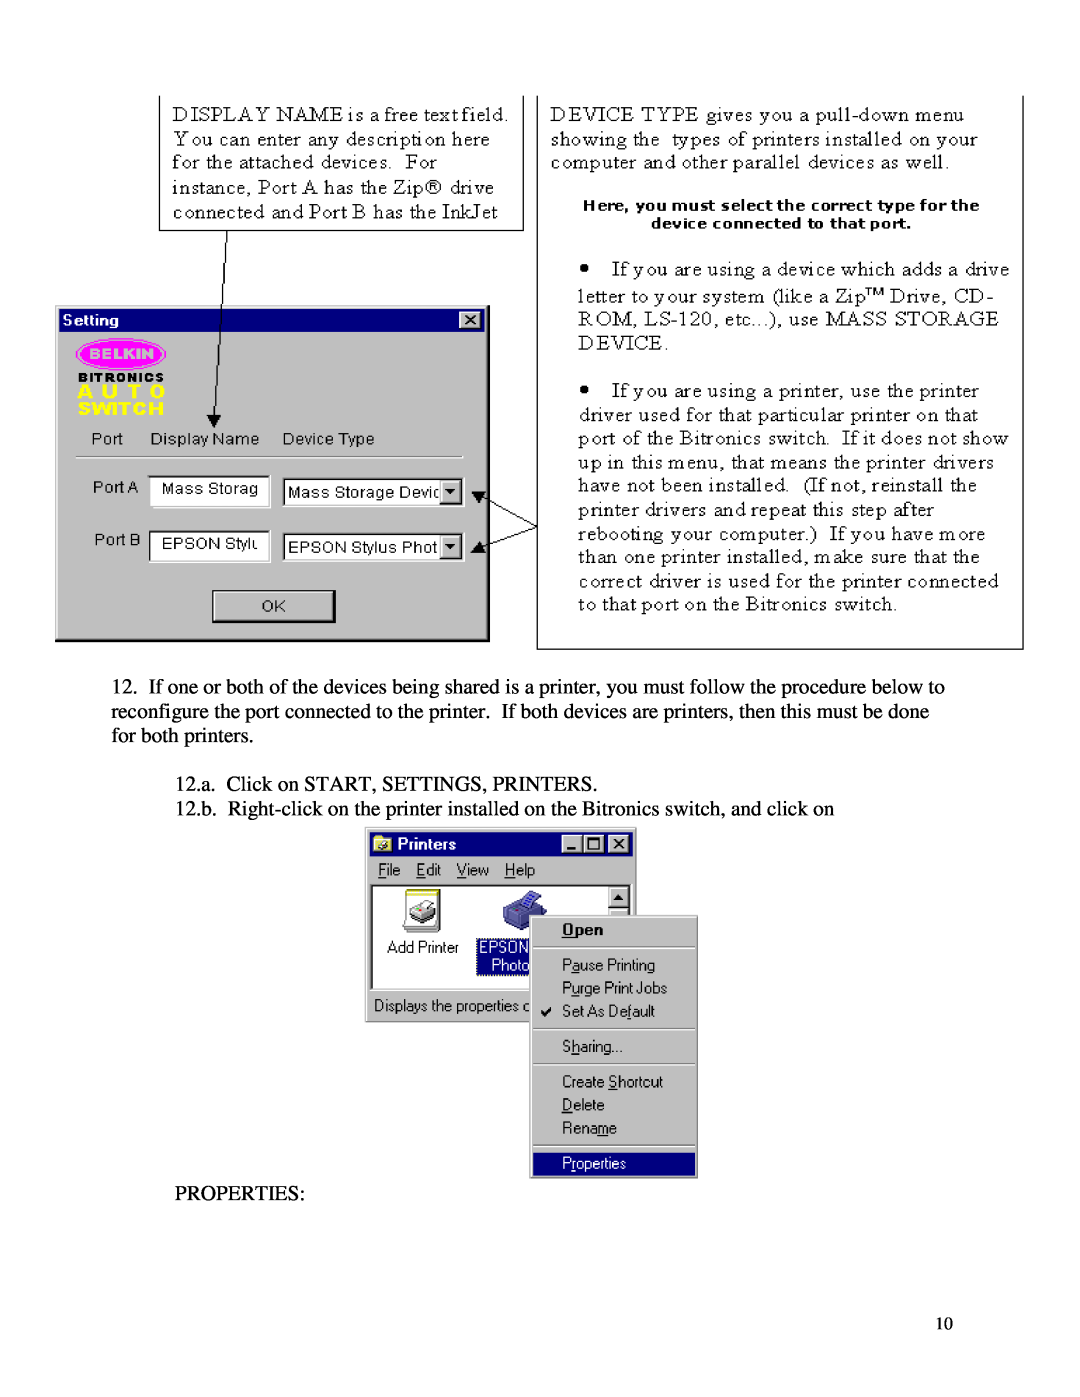 Belkin WINDOWS NT/2k/XP manual 12.a. Click on START, SETTINGS, PRINTERS, Properties 